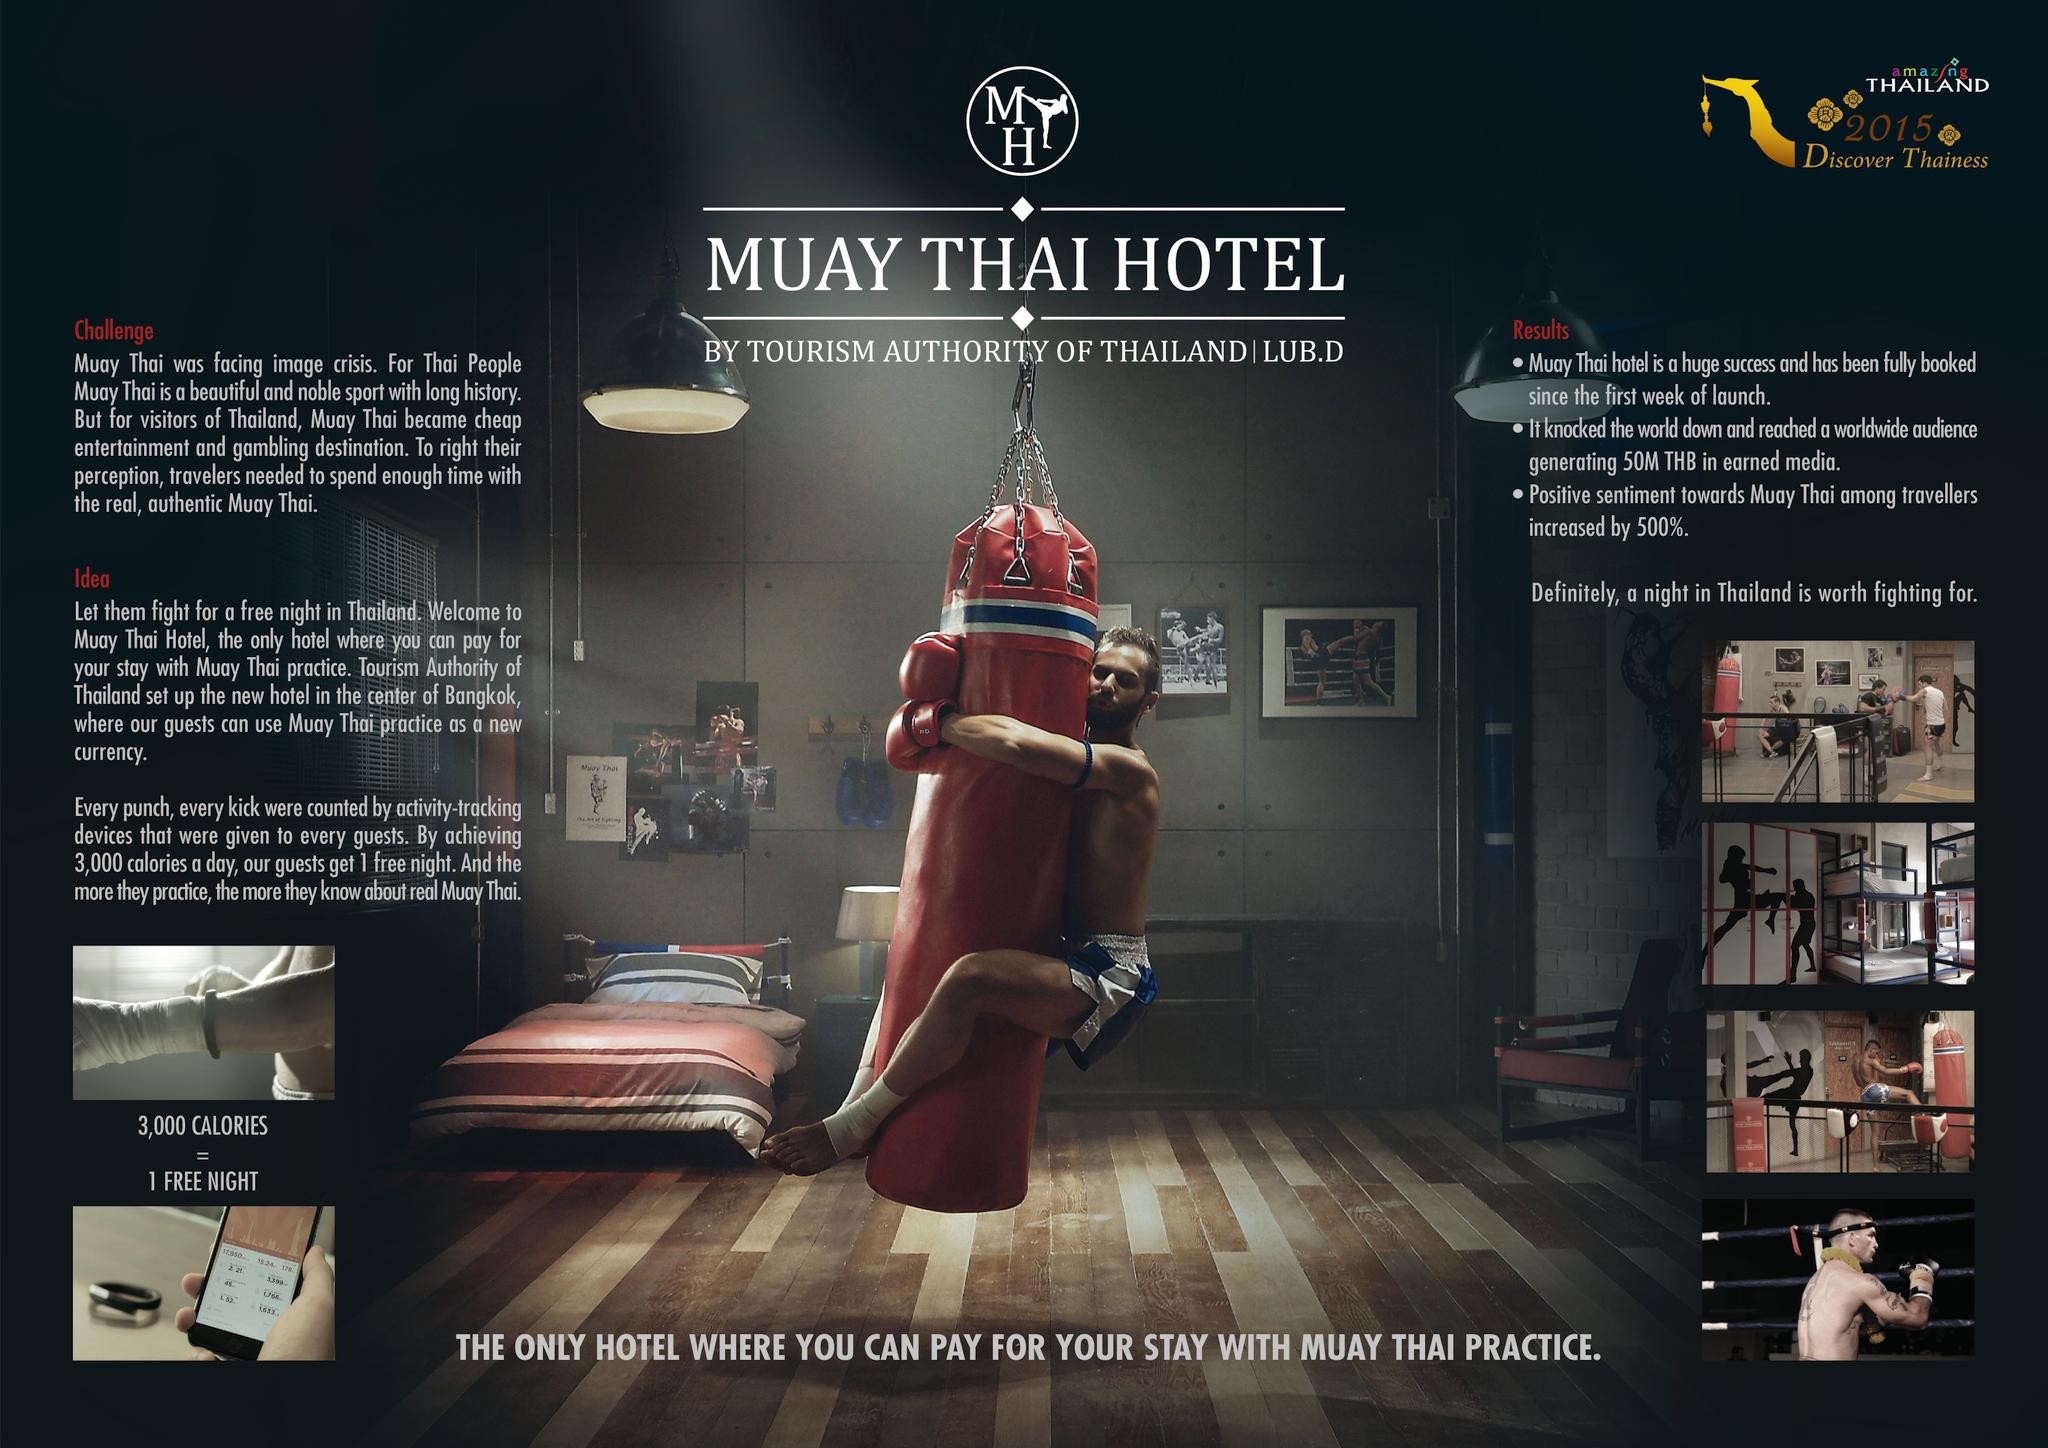 MUAY THAI HOTEL